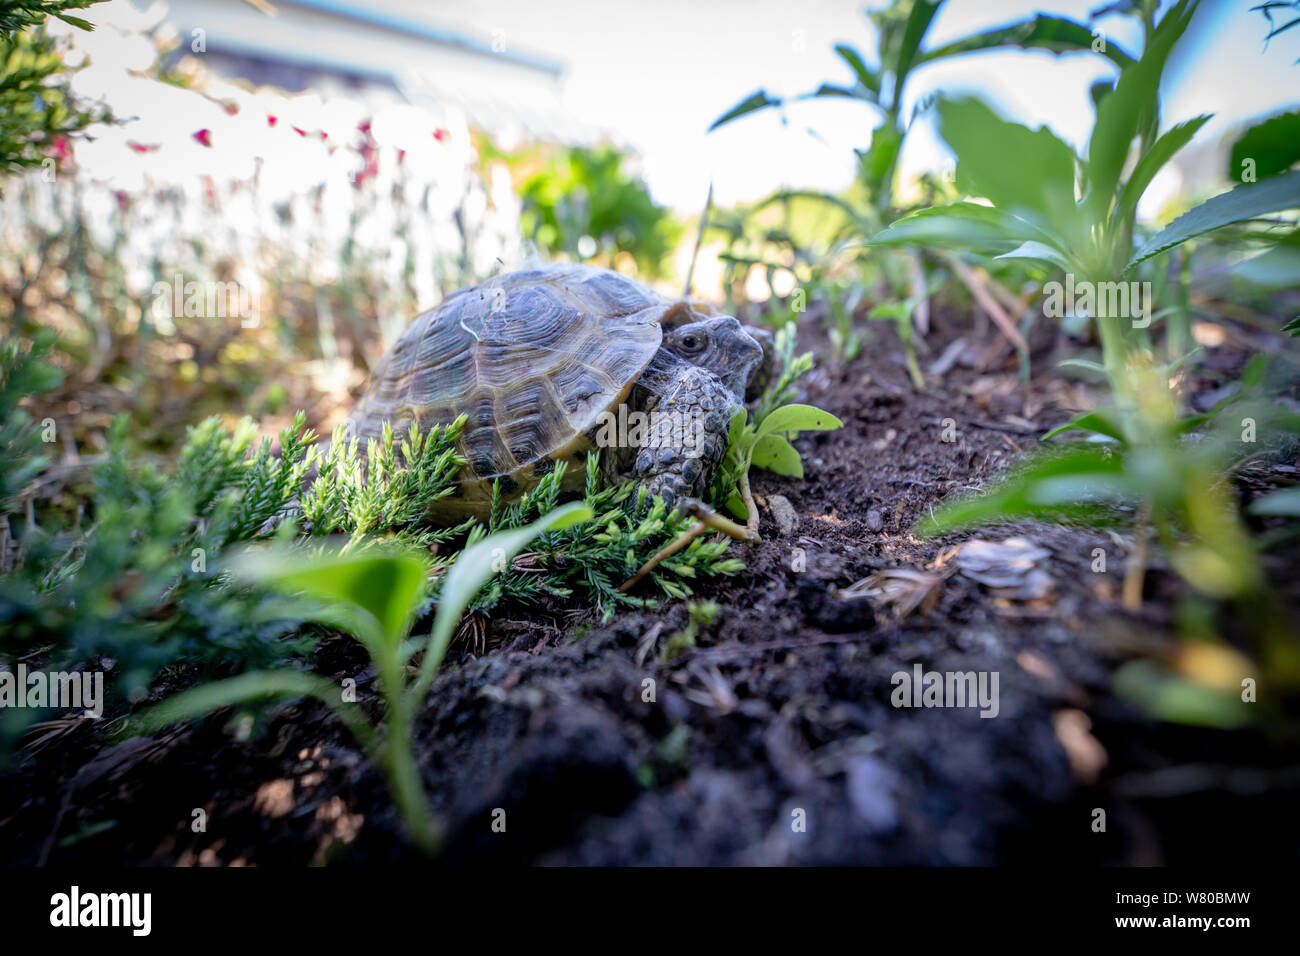 Russian tortoise pulling himself inside shell Stock Photo